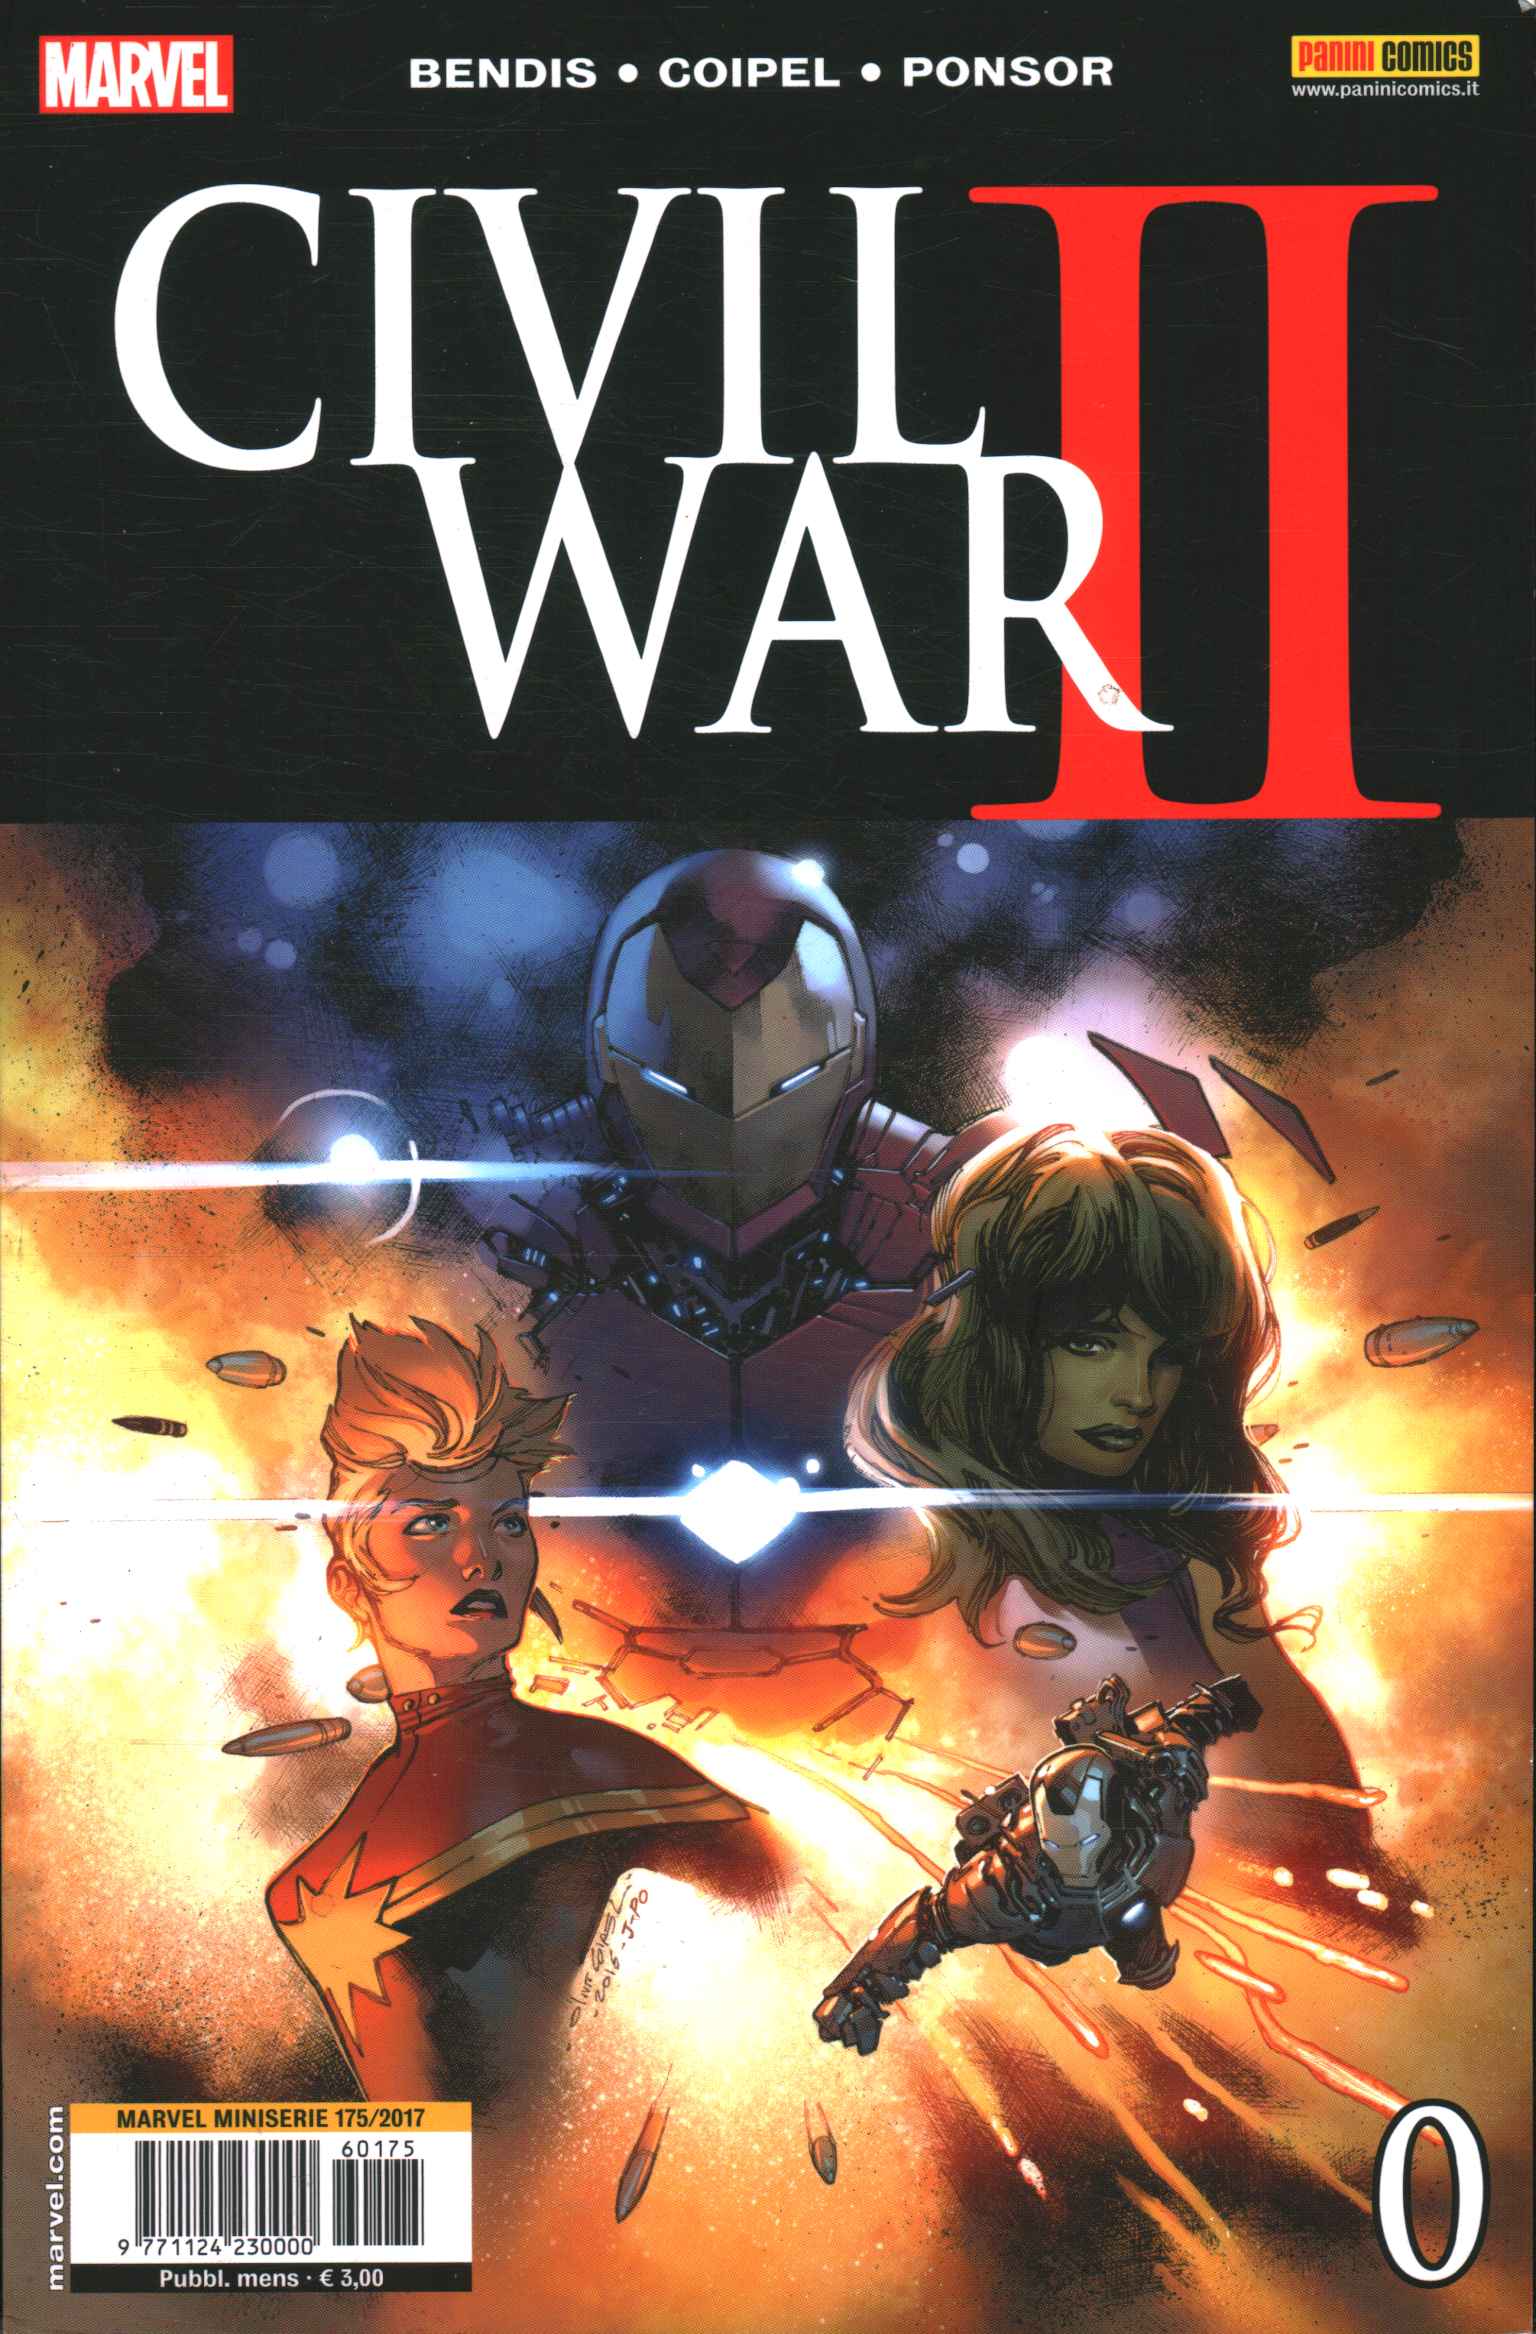 Civil War II. Complete series (9 Volumes